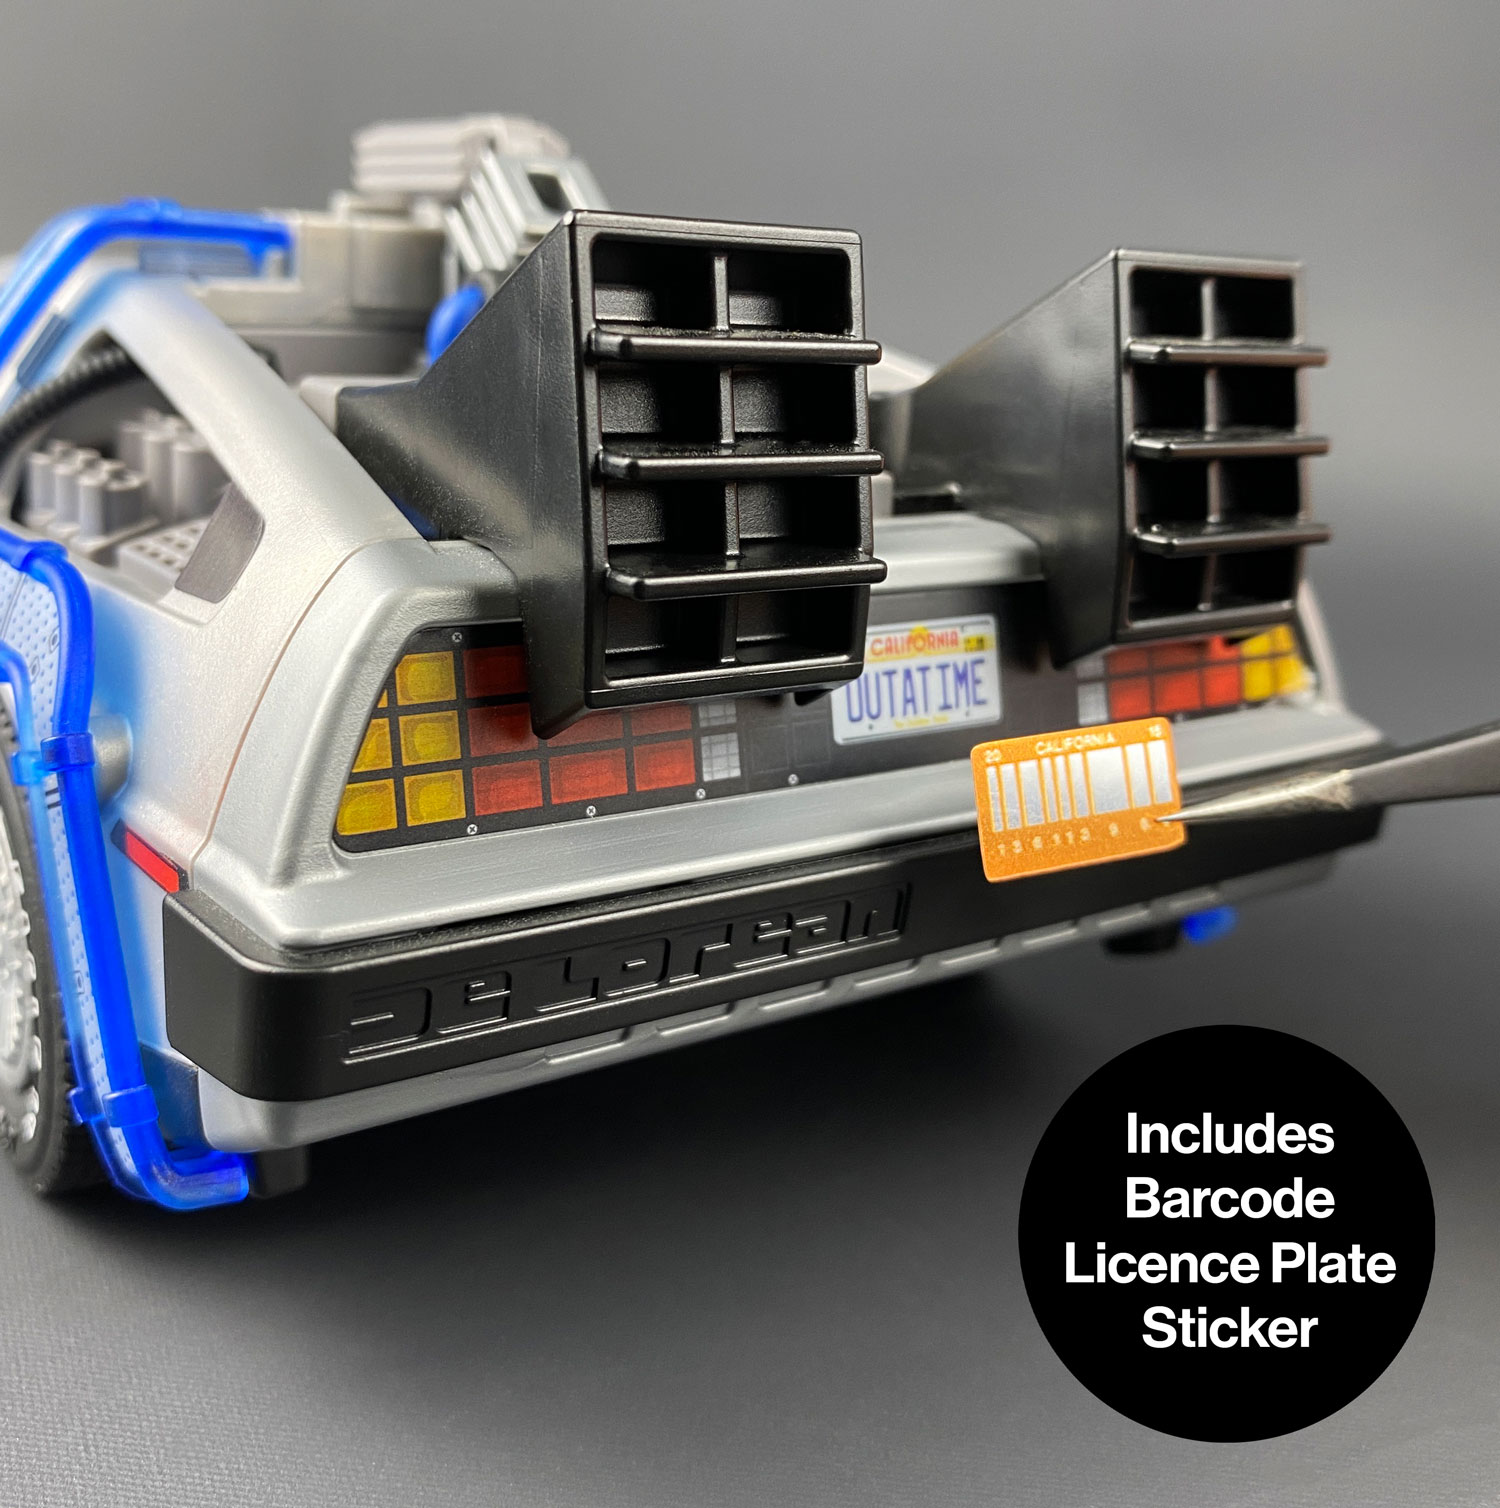 Licence Plates mod for Playmobil DeLorean model